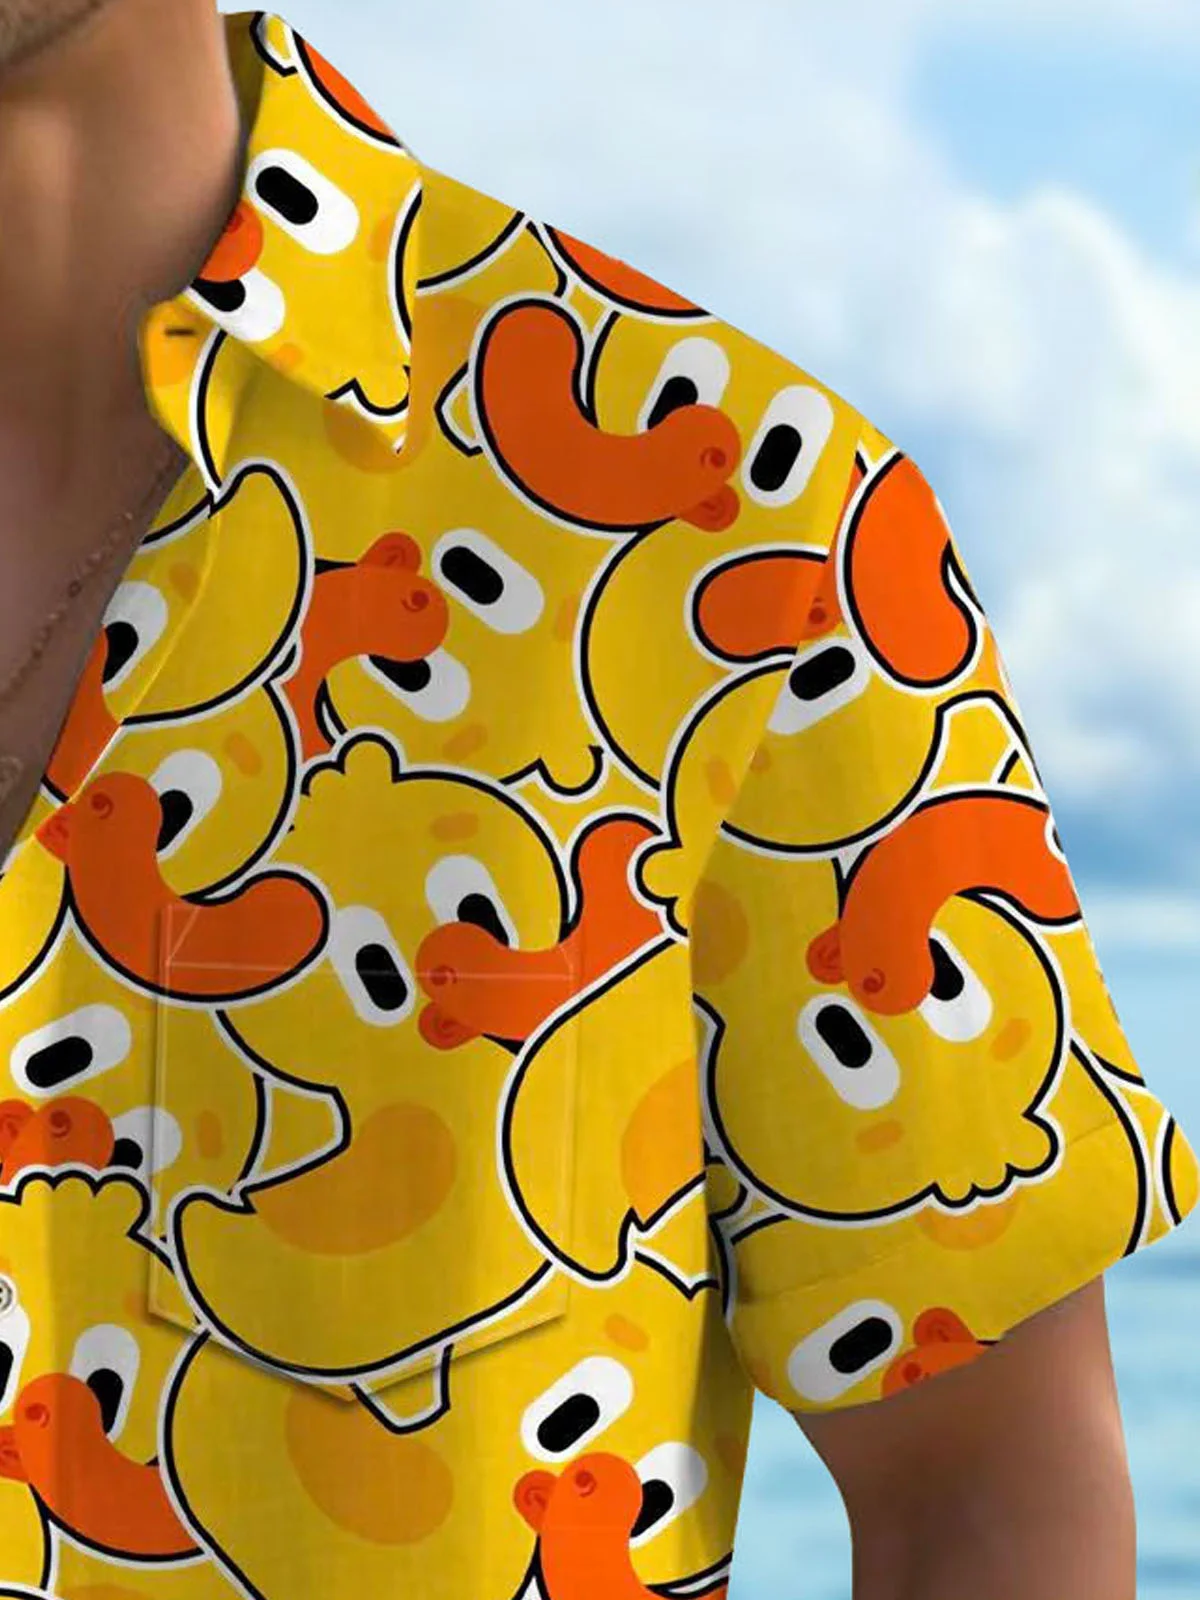 Royaura® Hawaiian Duck Print Men's Button Pocket Short Sleeve Shirt